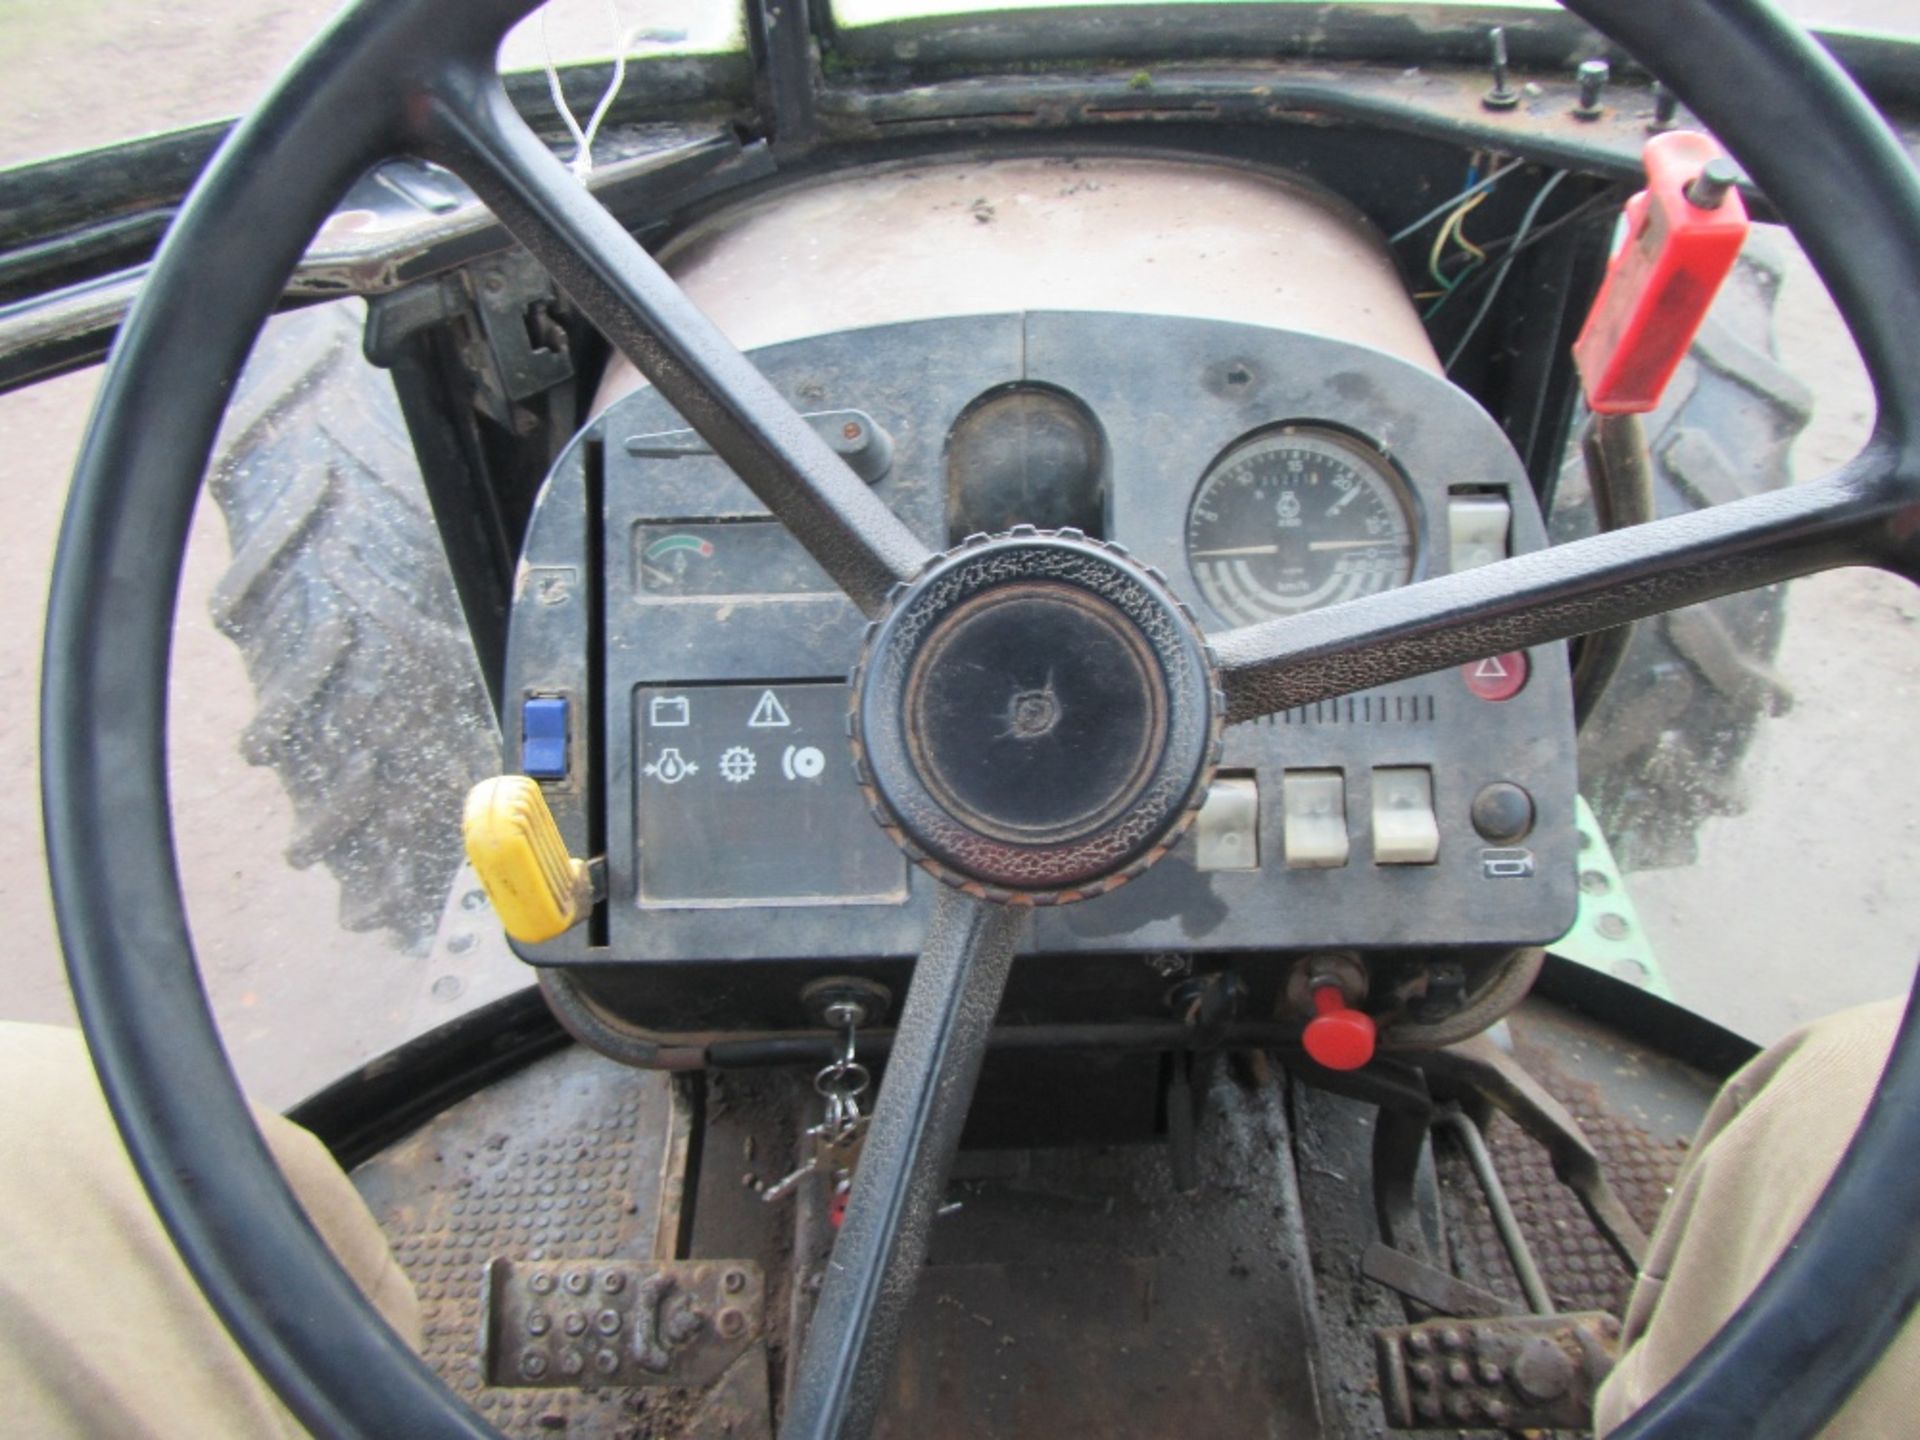 1990 John Deere 2850 4wd Tractor c/w SG2 Cab Ser No 699667 - Image 15 of 17